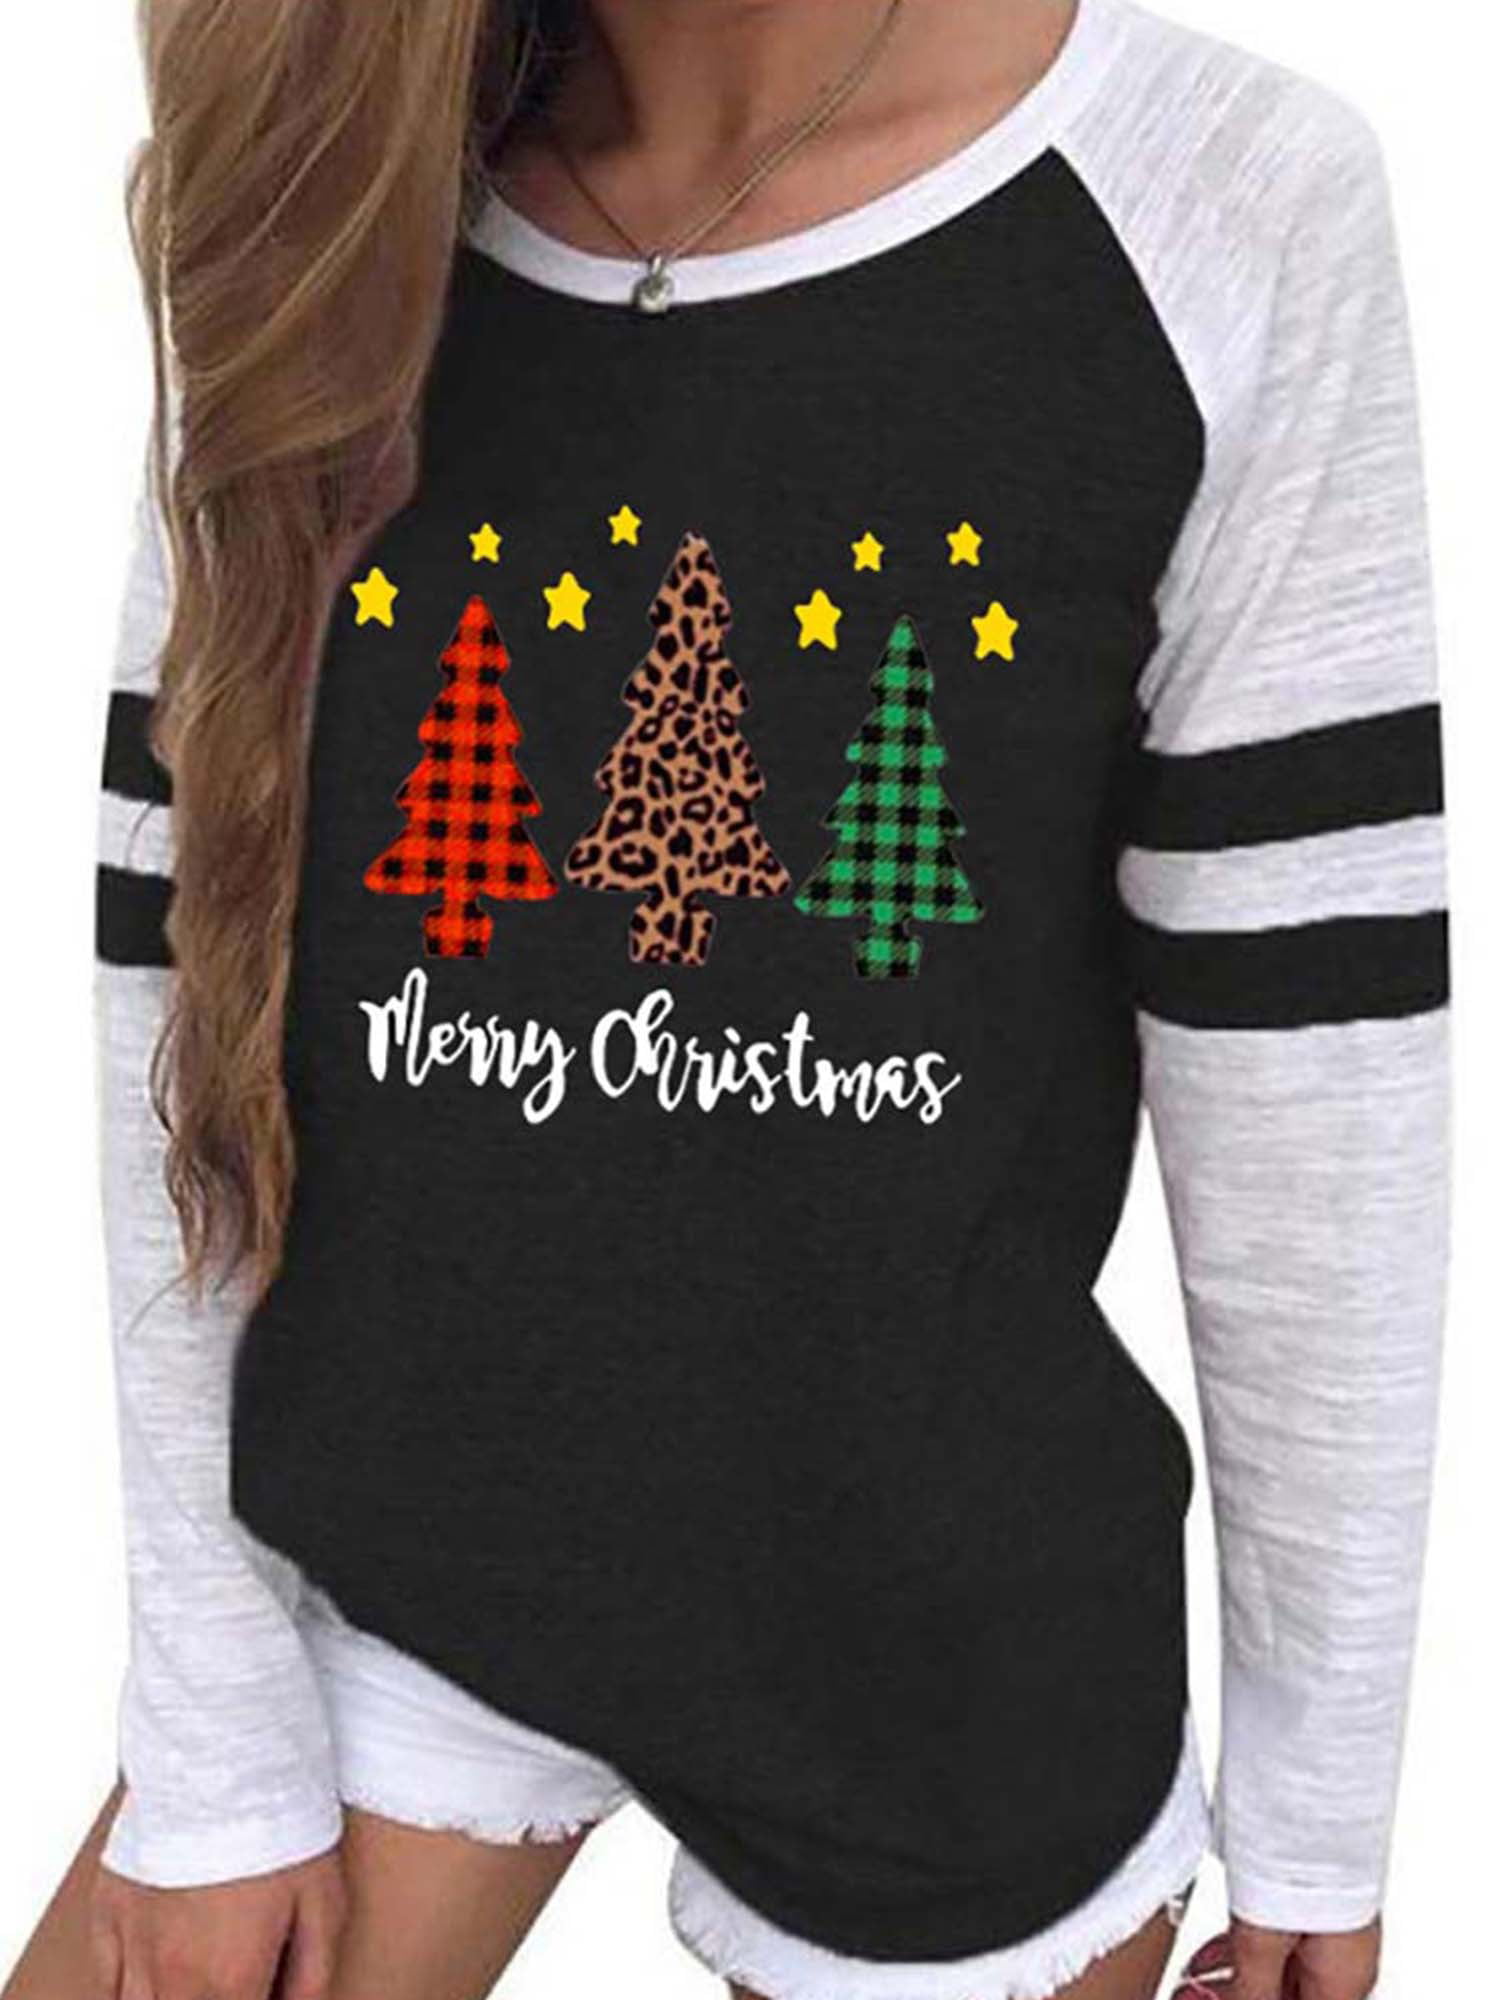 Misses and Plus Size Long Sleeve Christmas Shirt Womens Christmas Shirt Tis the Season to be Baking